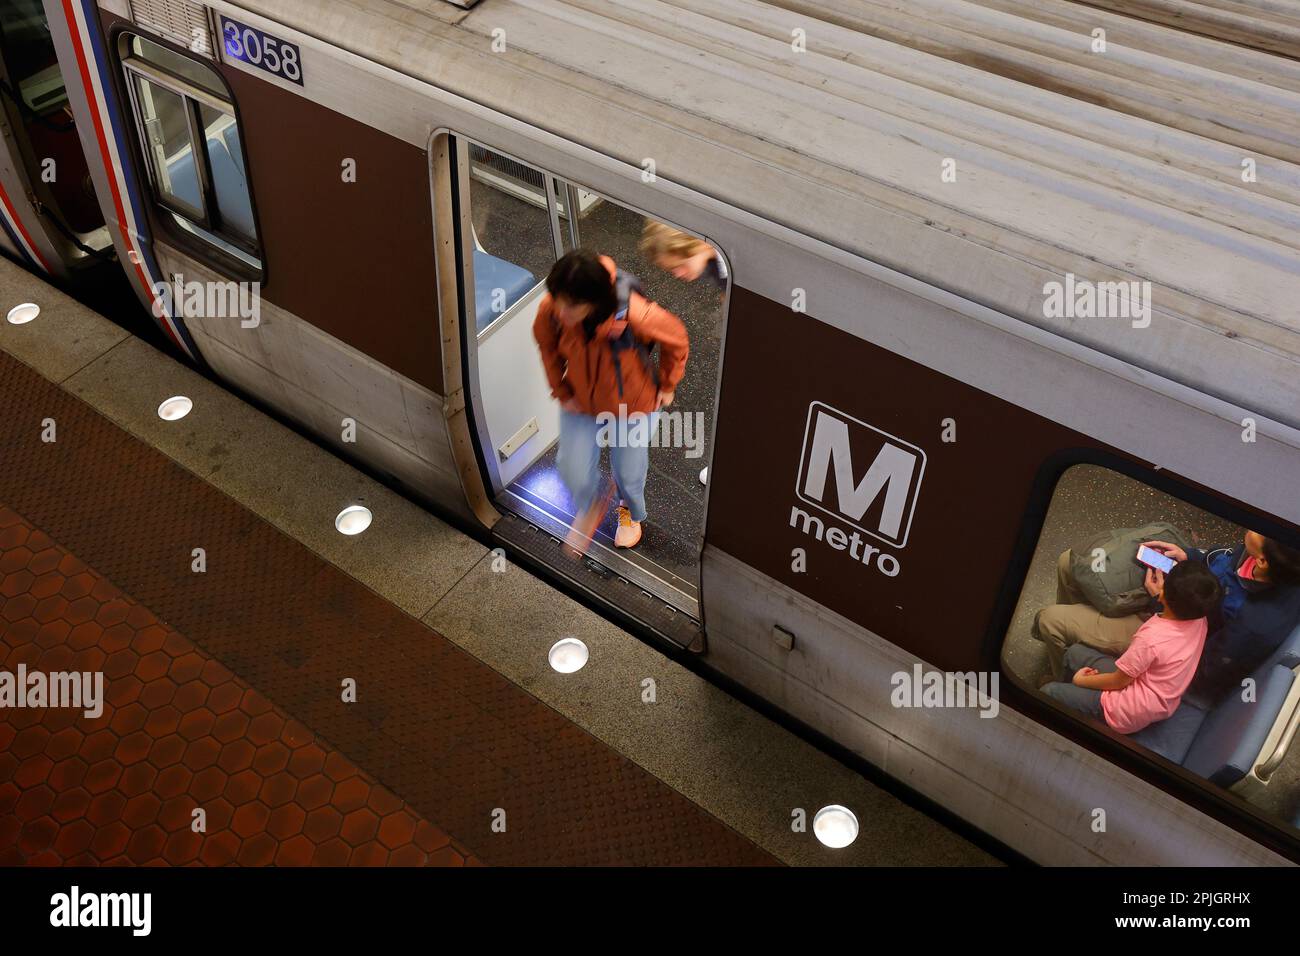 People alighting from a 3000 series DC Metro subway train car, washington dc metrorail Stock Photo